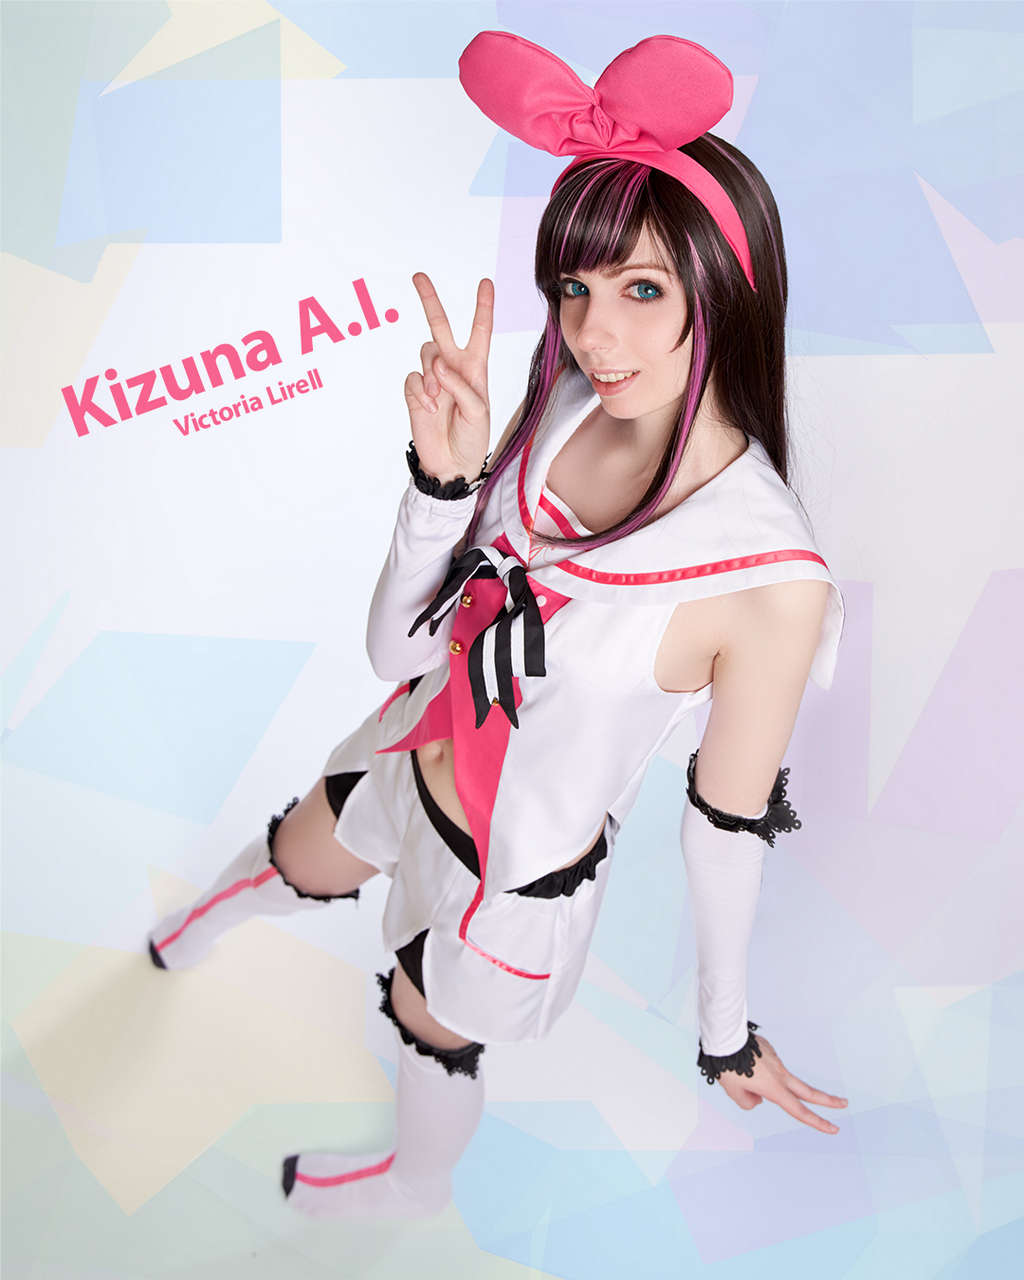 Kizuna Ai The Virtual Youtuber By Victoria Lirel